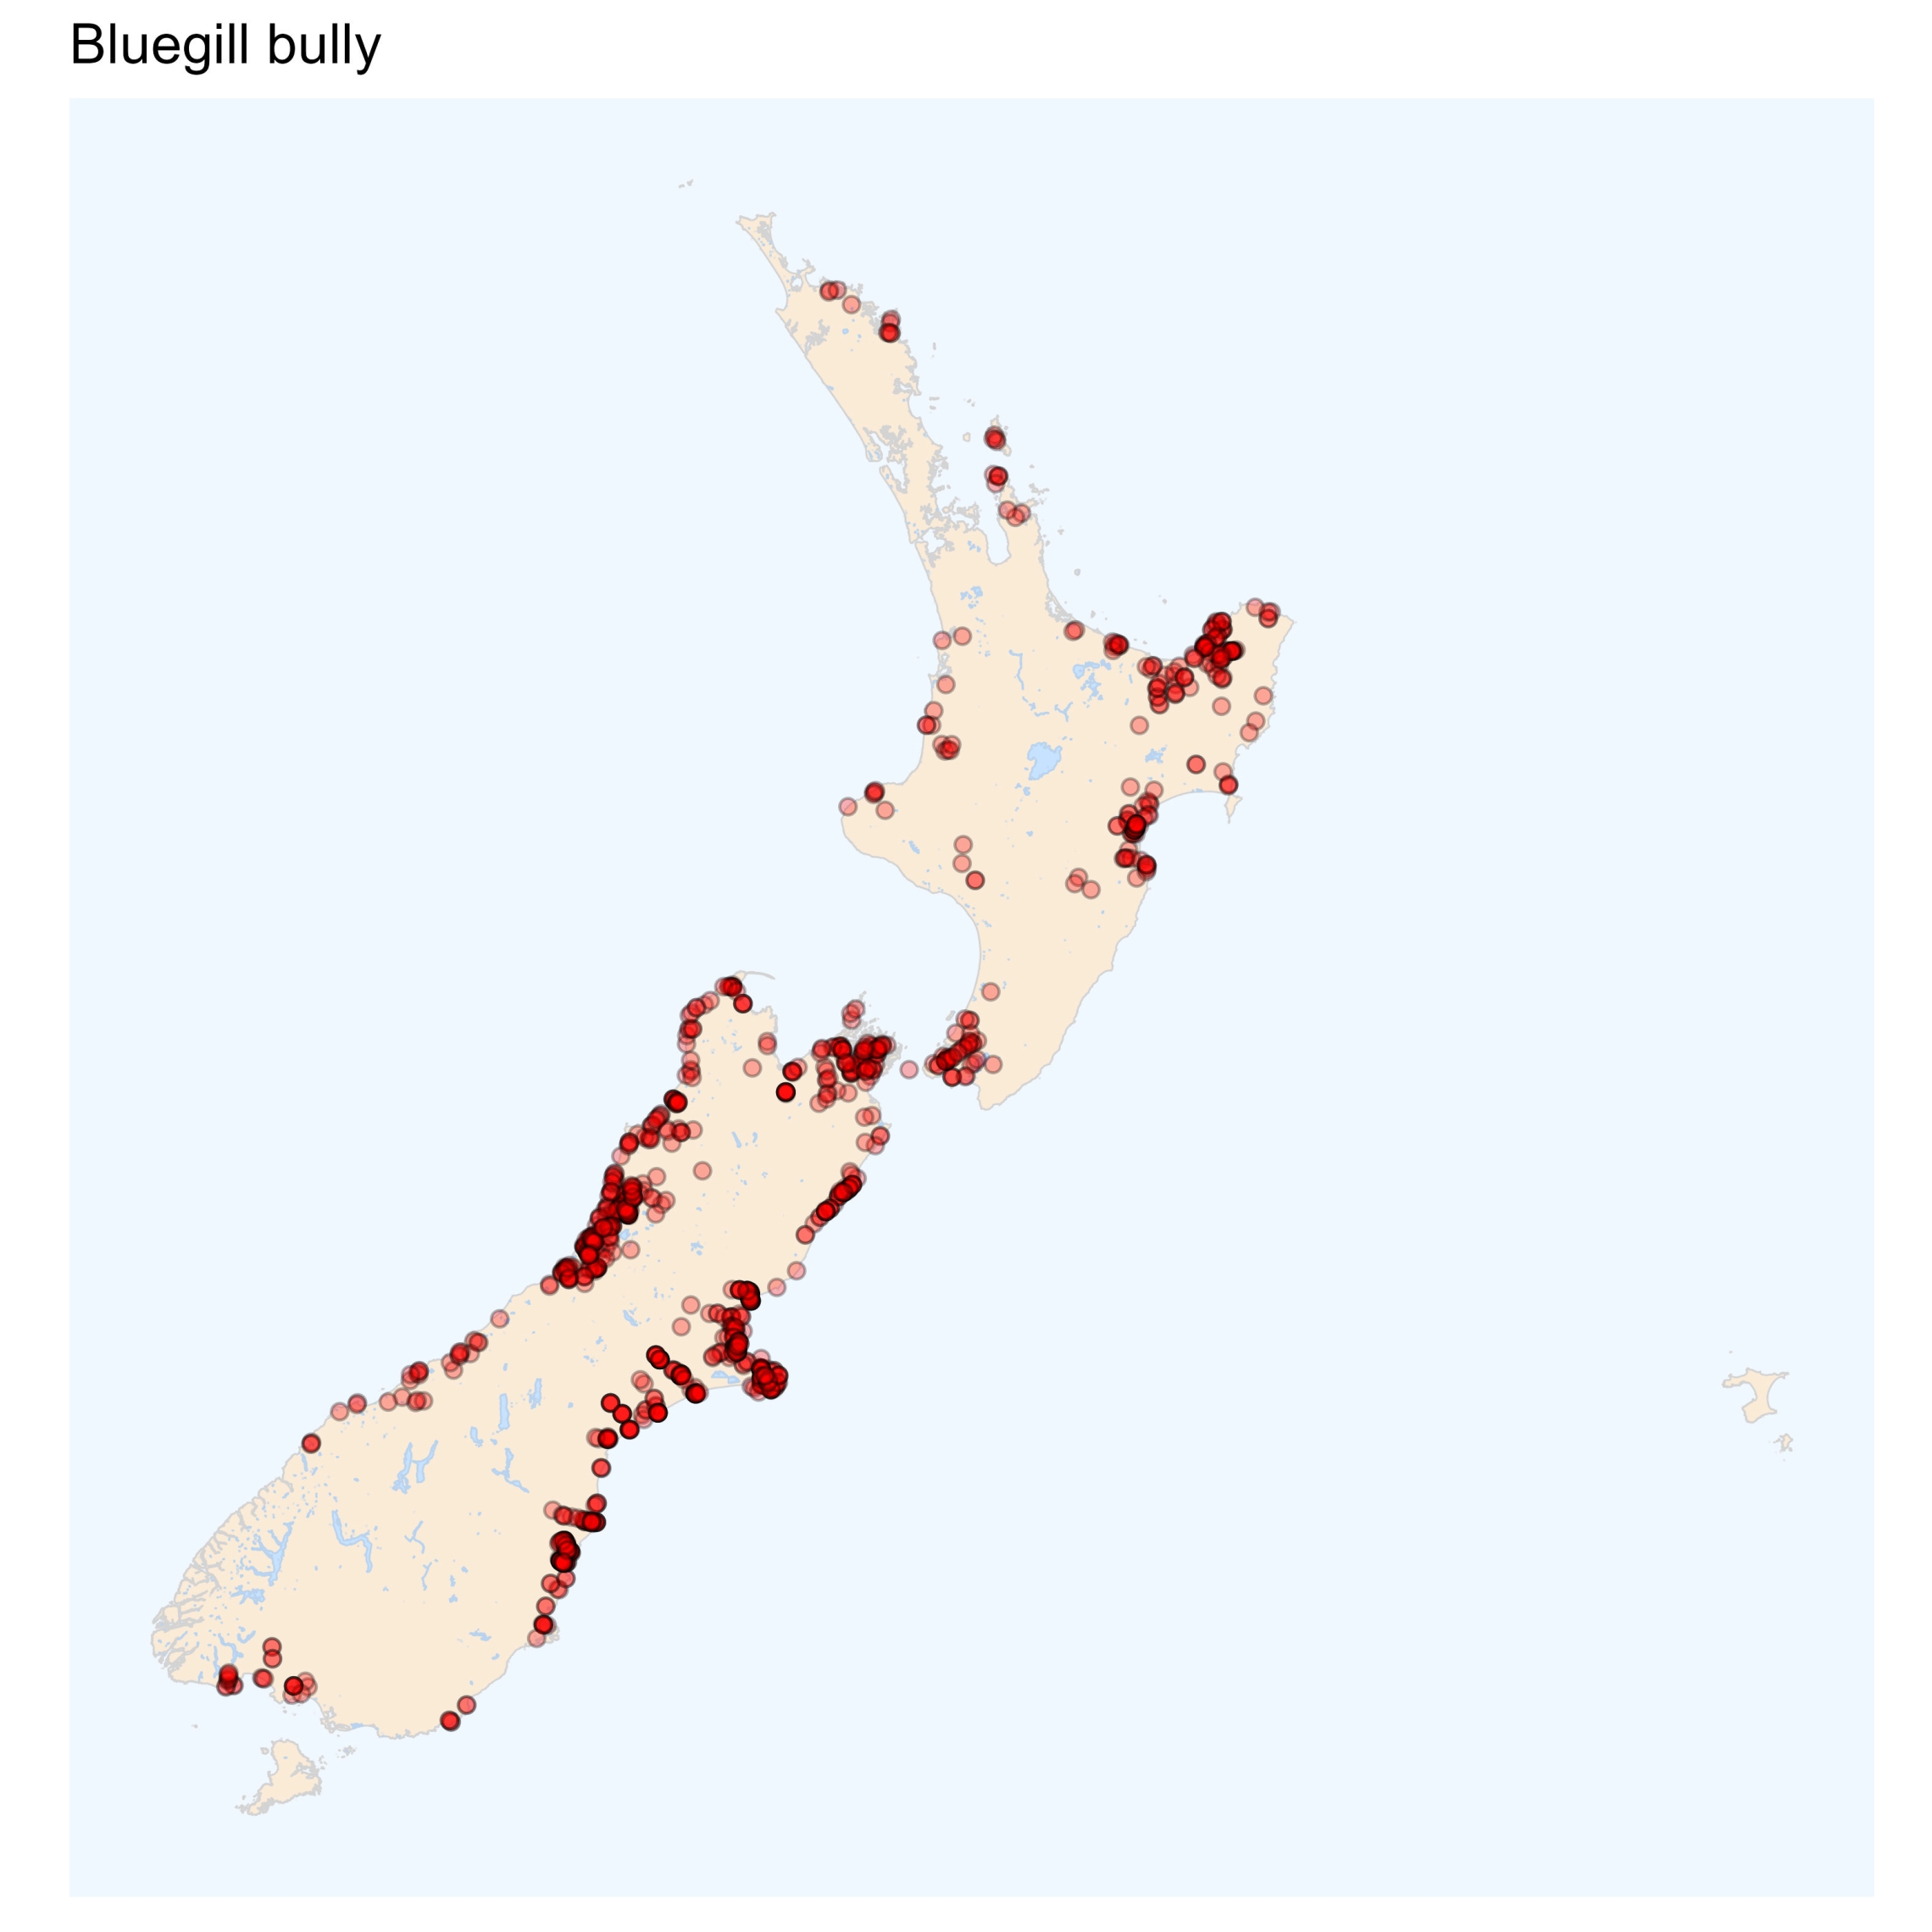 Bluegill bully - distribution map [NIWA]